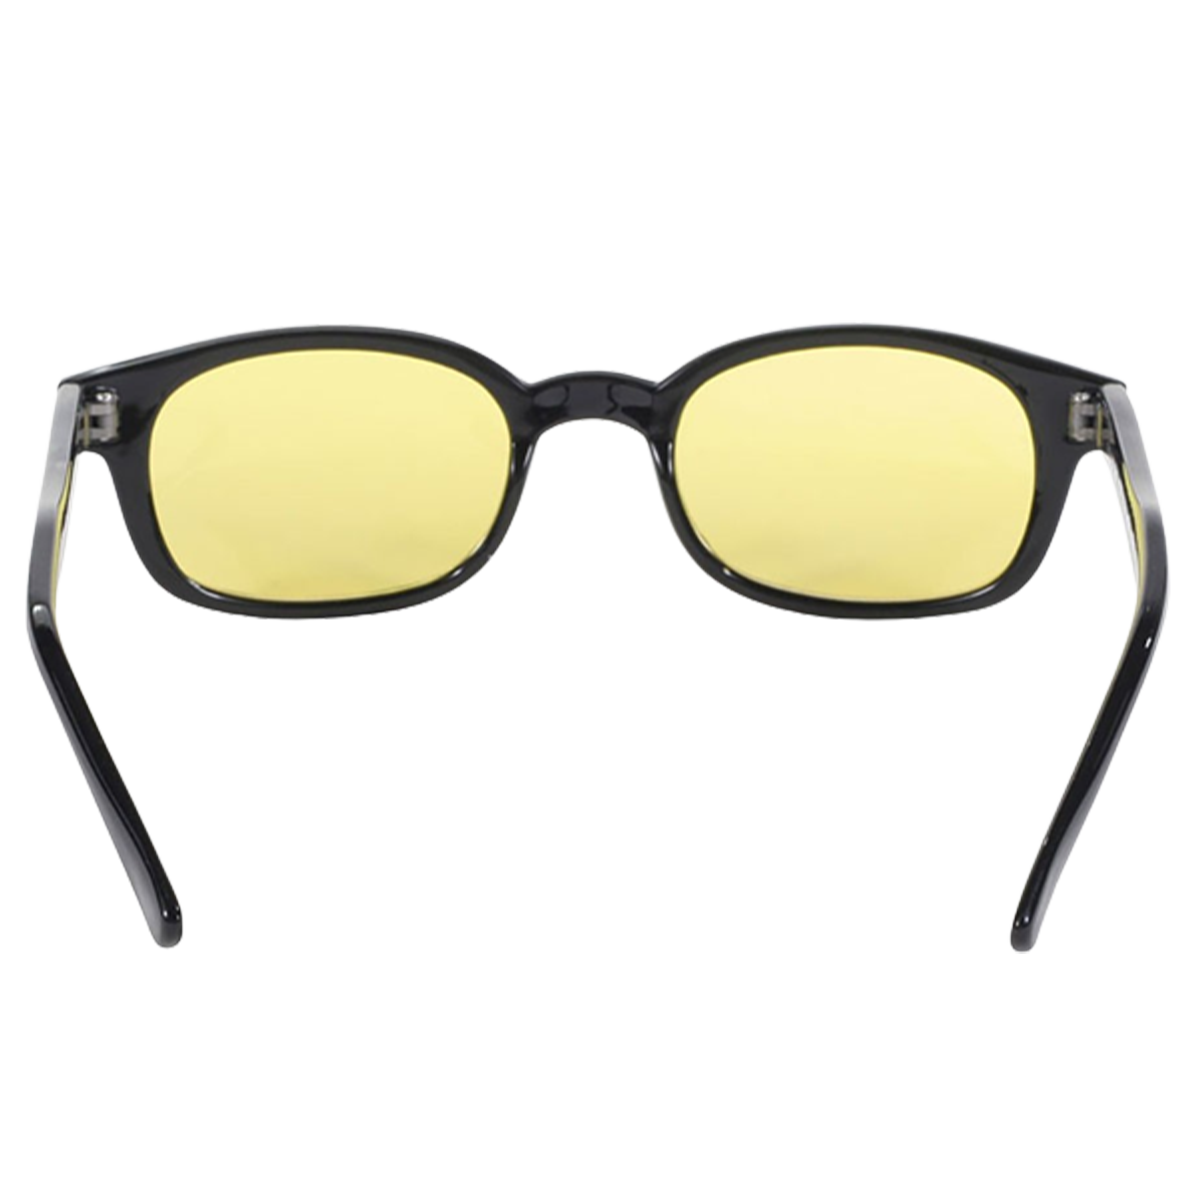 Sunglasses KD's 20112 Classic - Yellow lenses